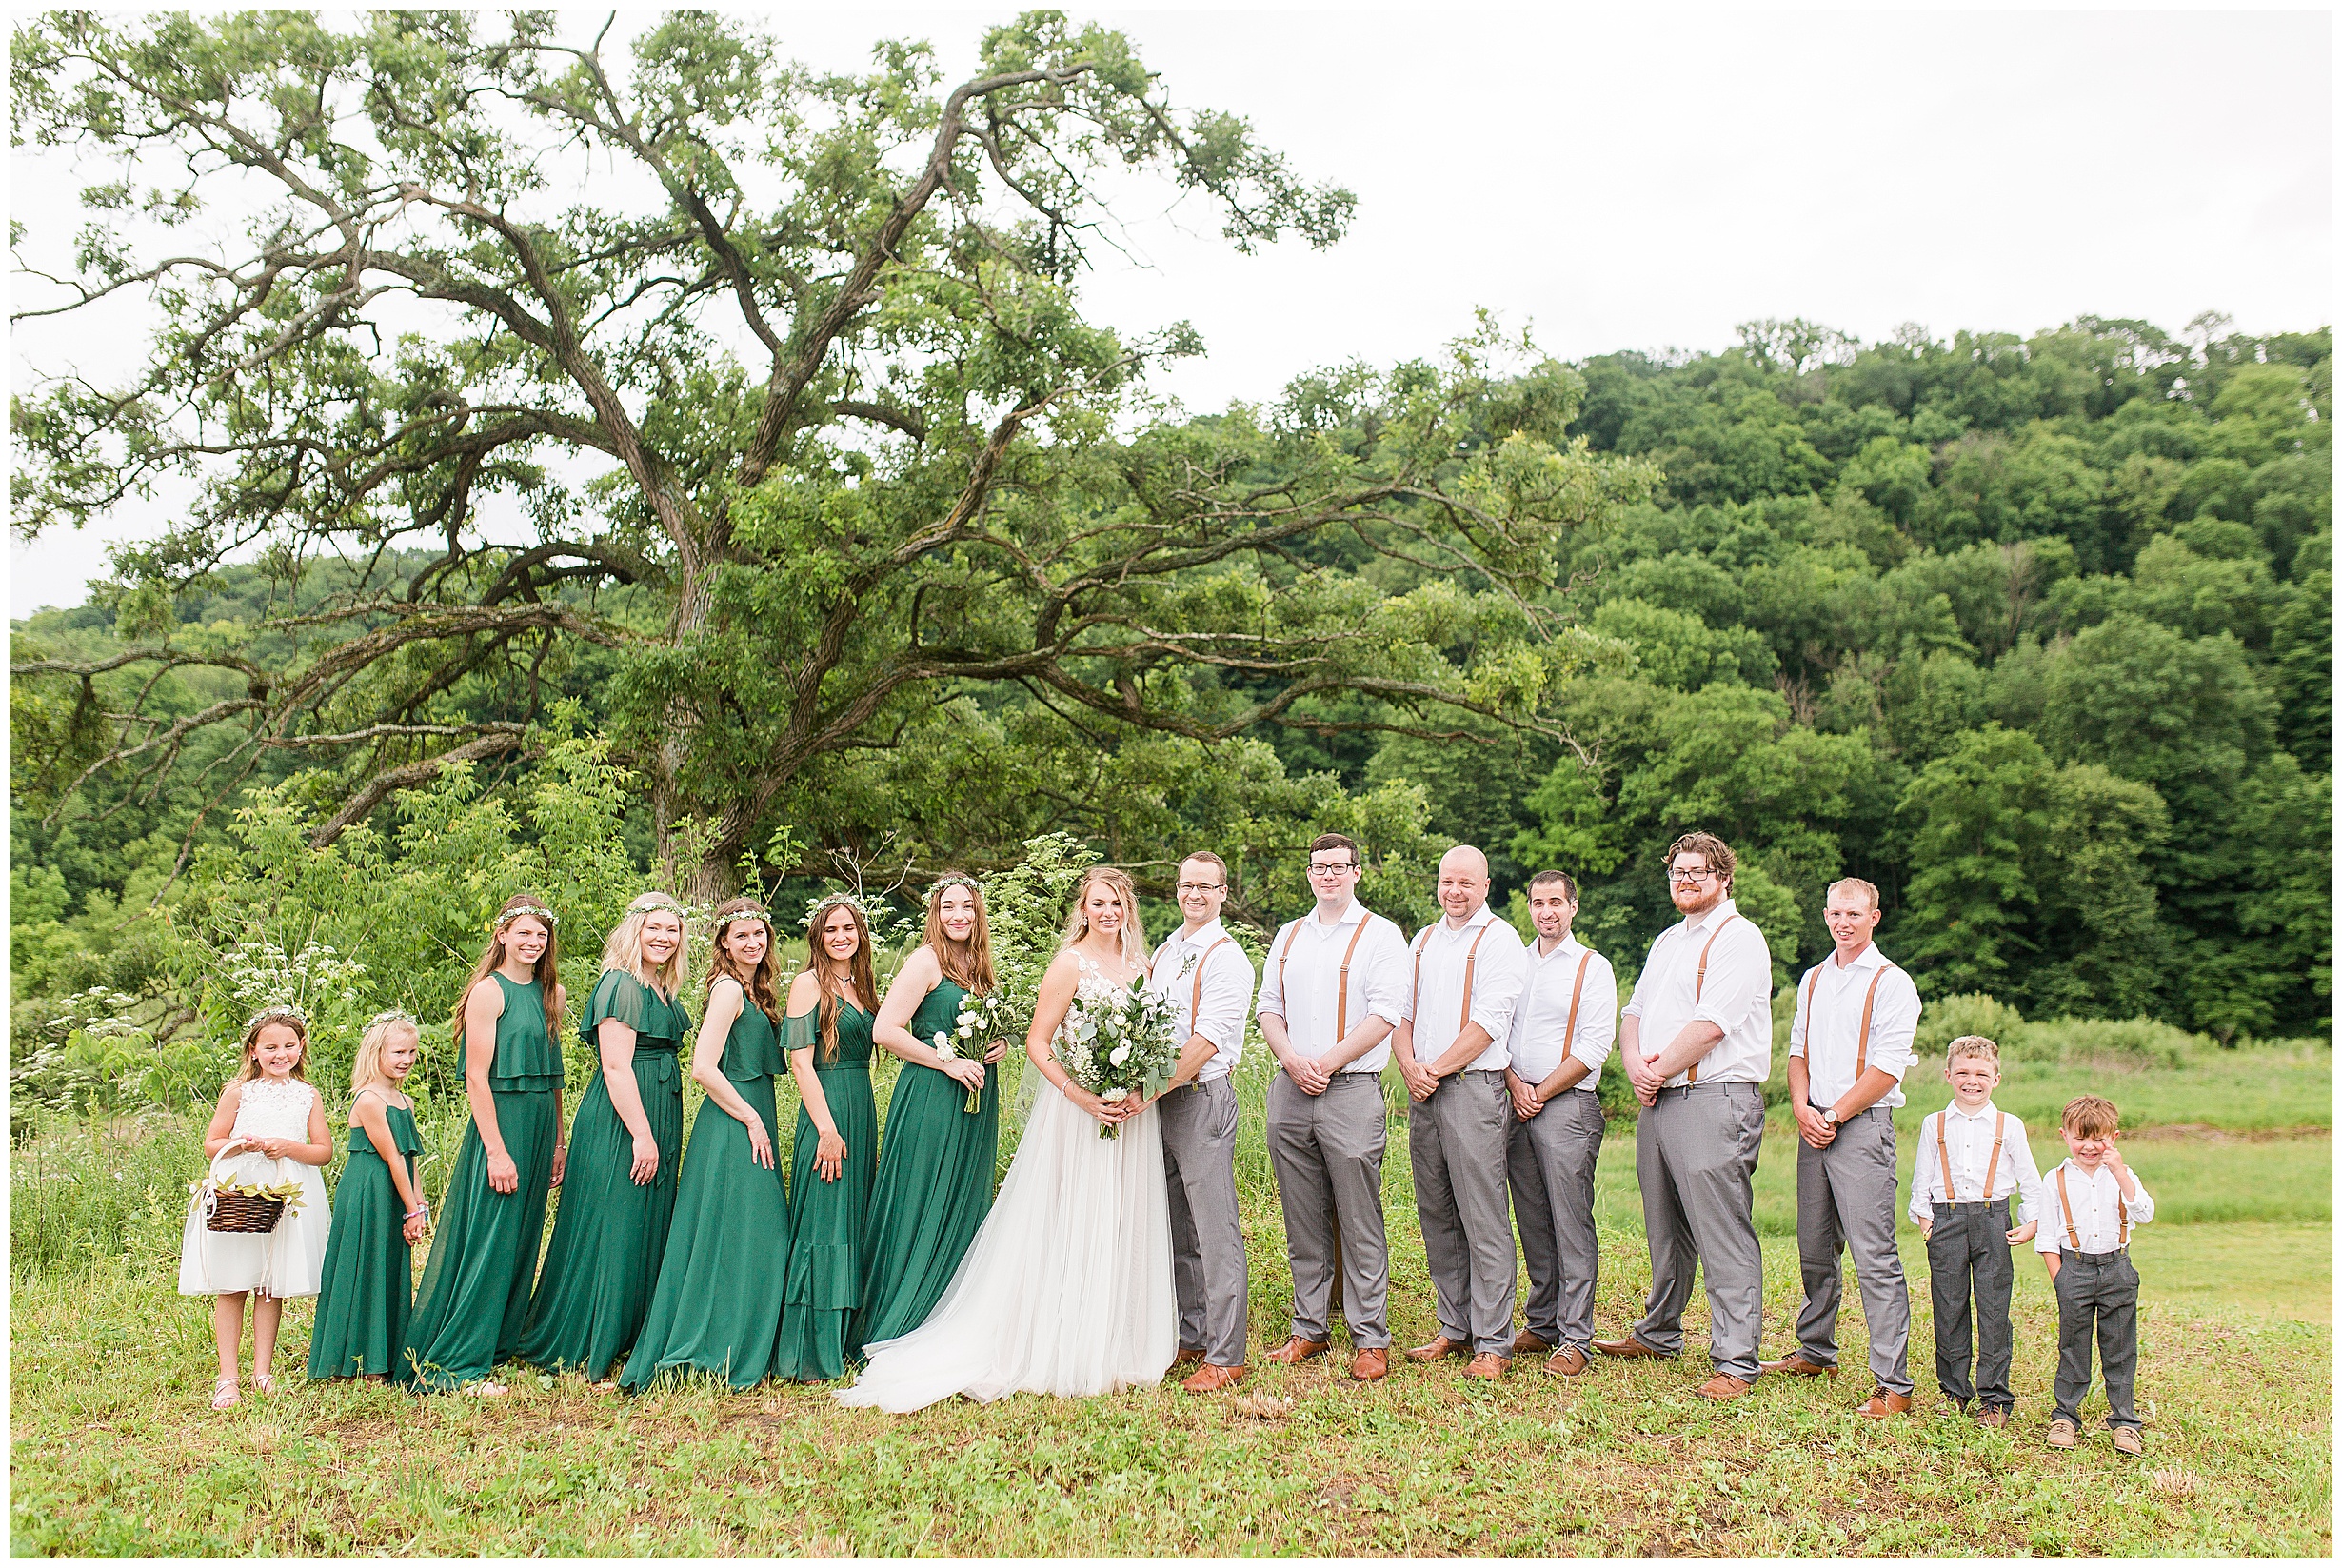 Rainy Iowa Wedding | McGregor Iowa | Megan Snitker Photography_0047.jpg